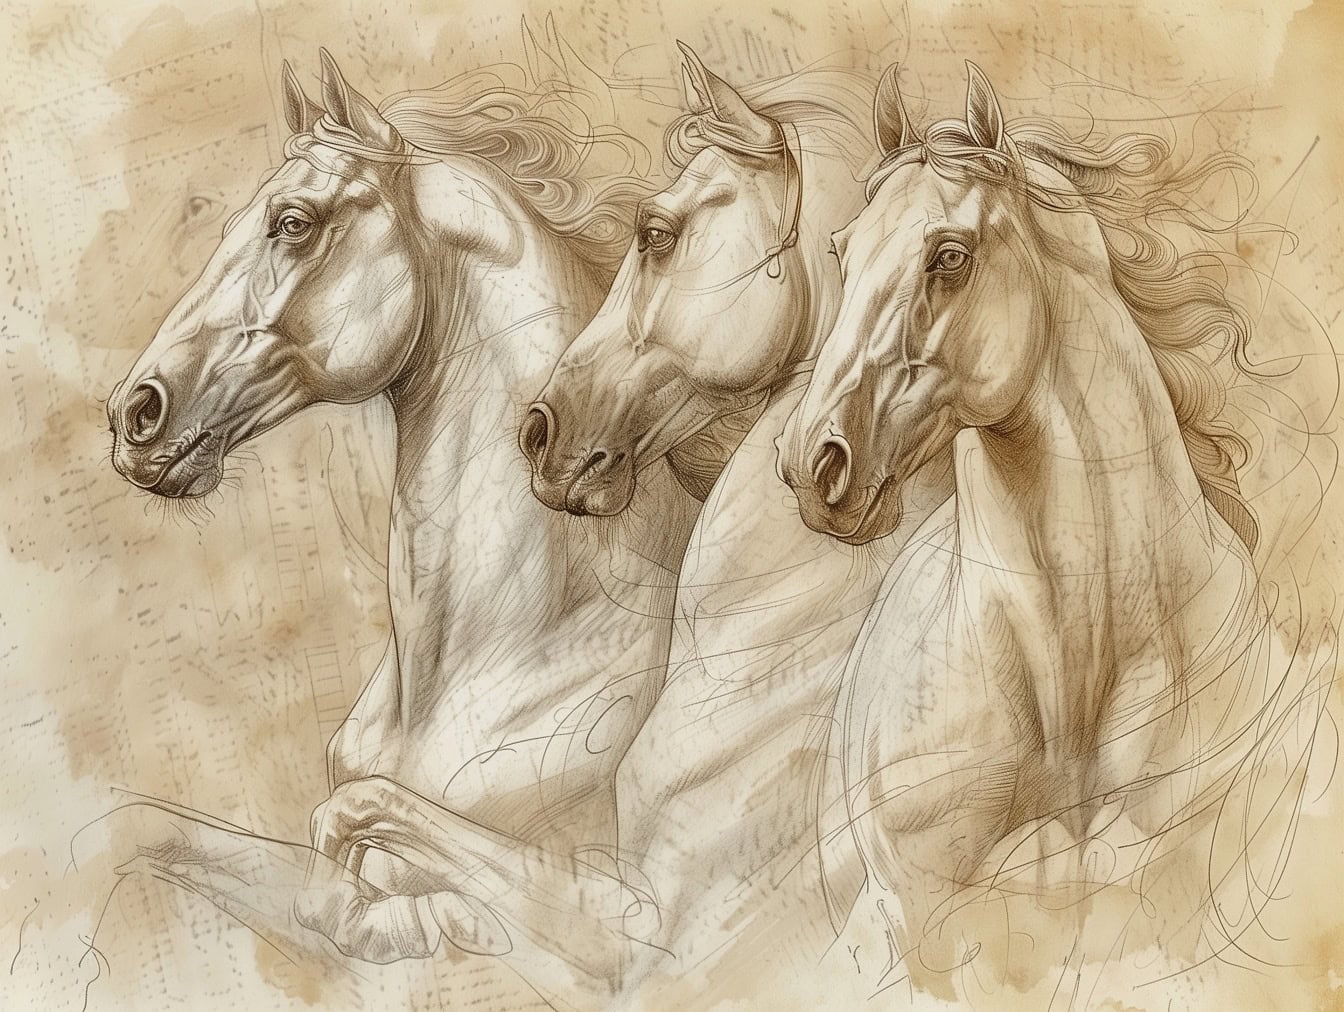 Gambar tangan kuda di atas kertas semitransparan tua pudar dengan gaya karya seni seniman abad pertengahan